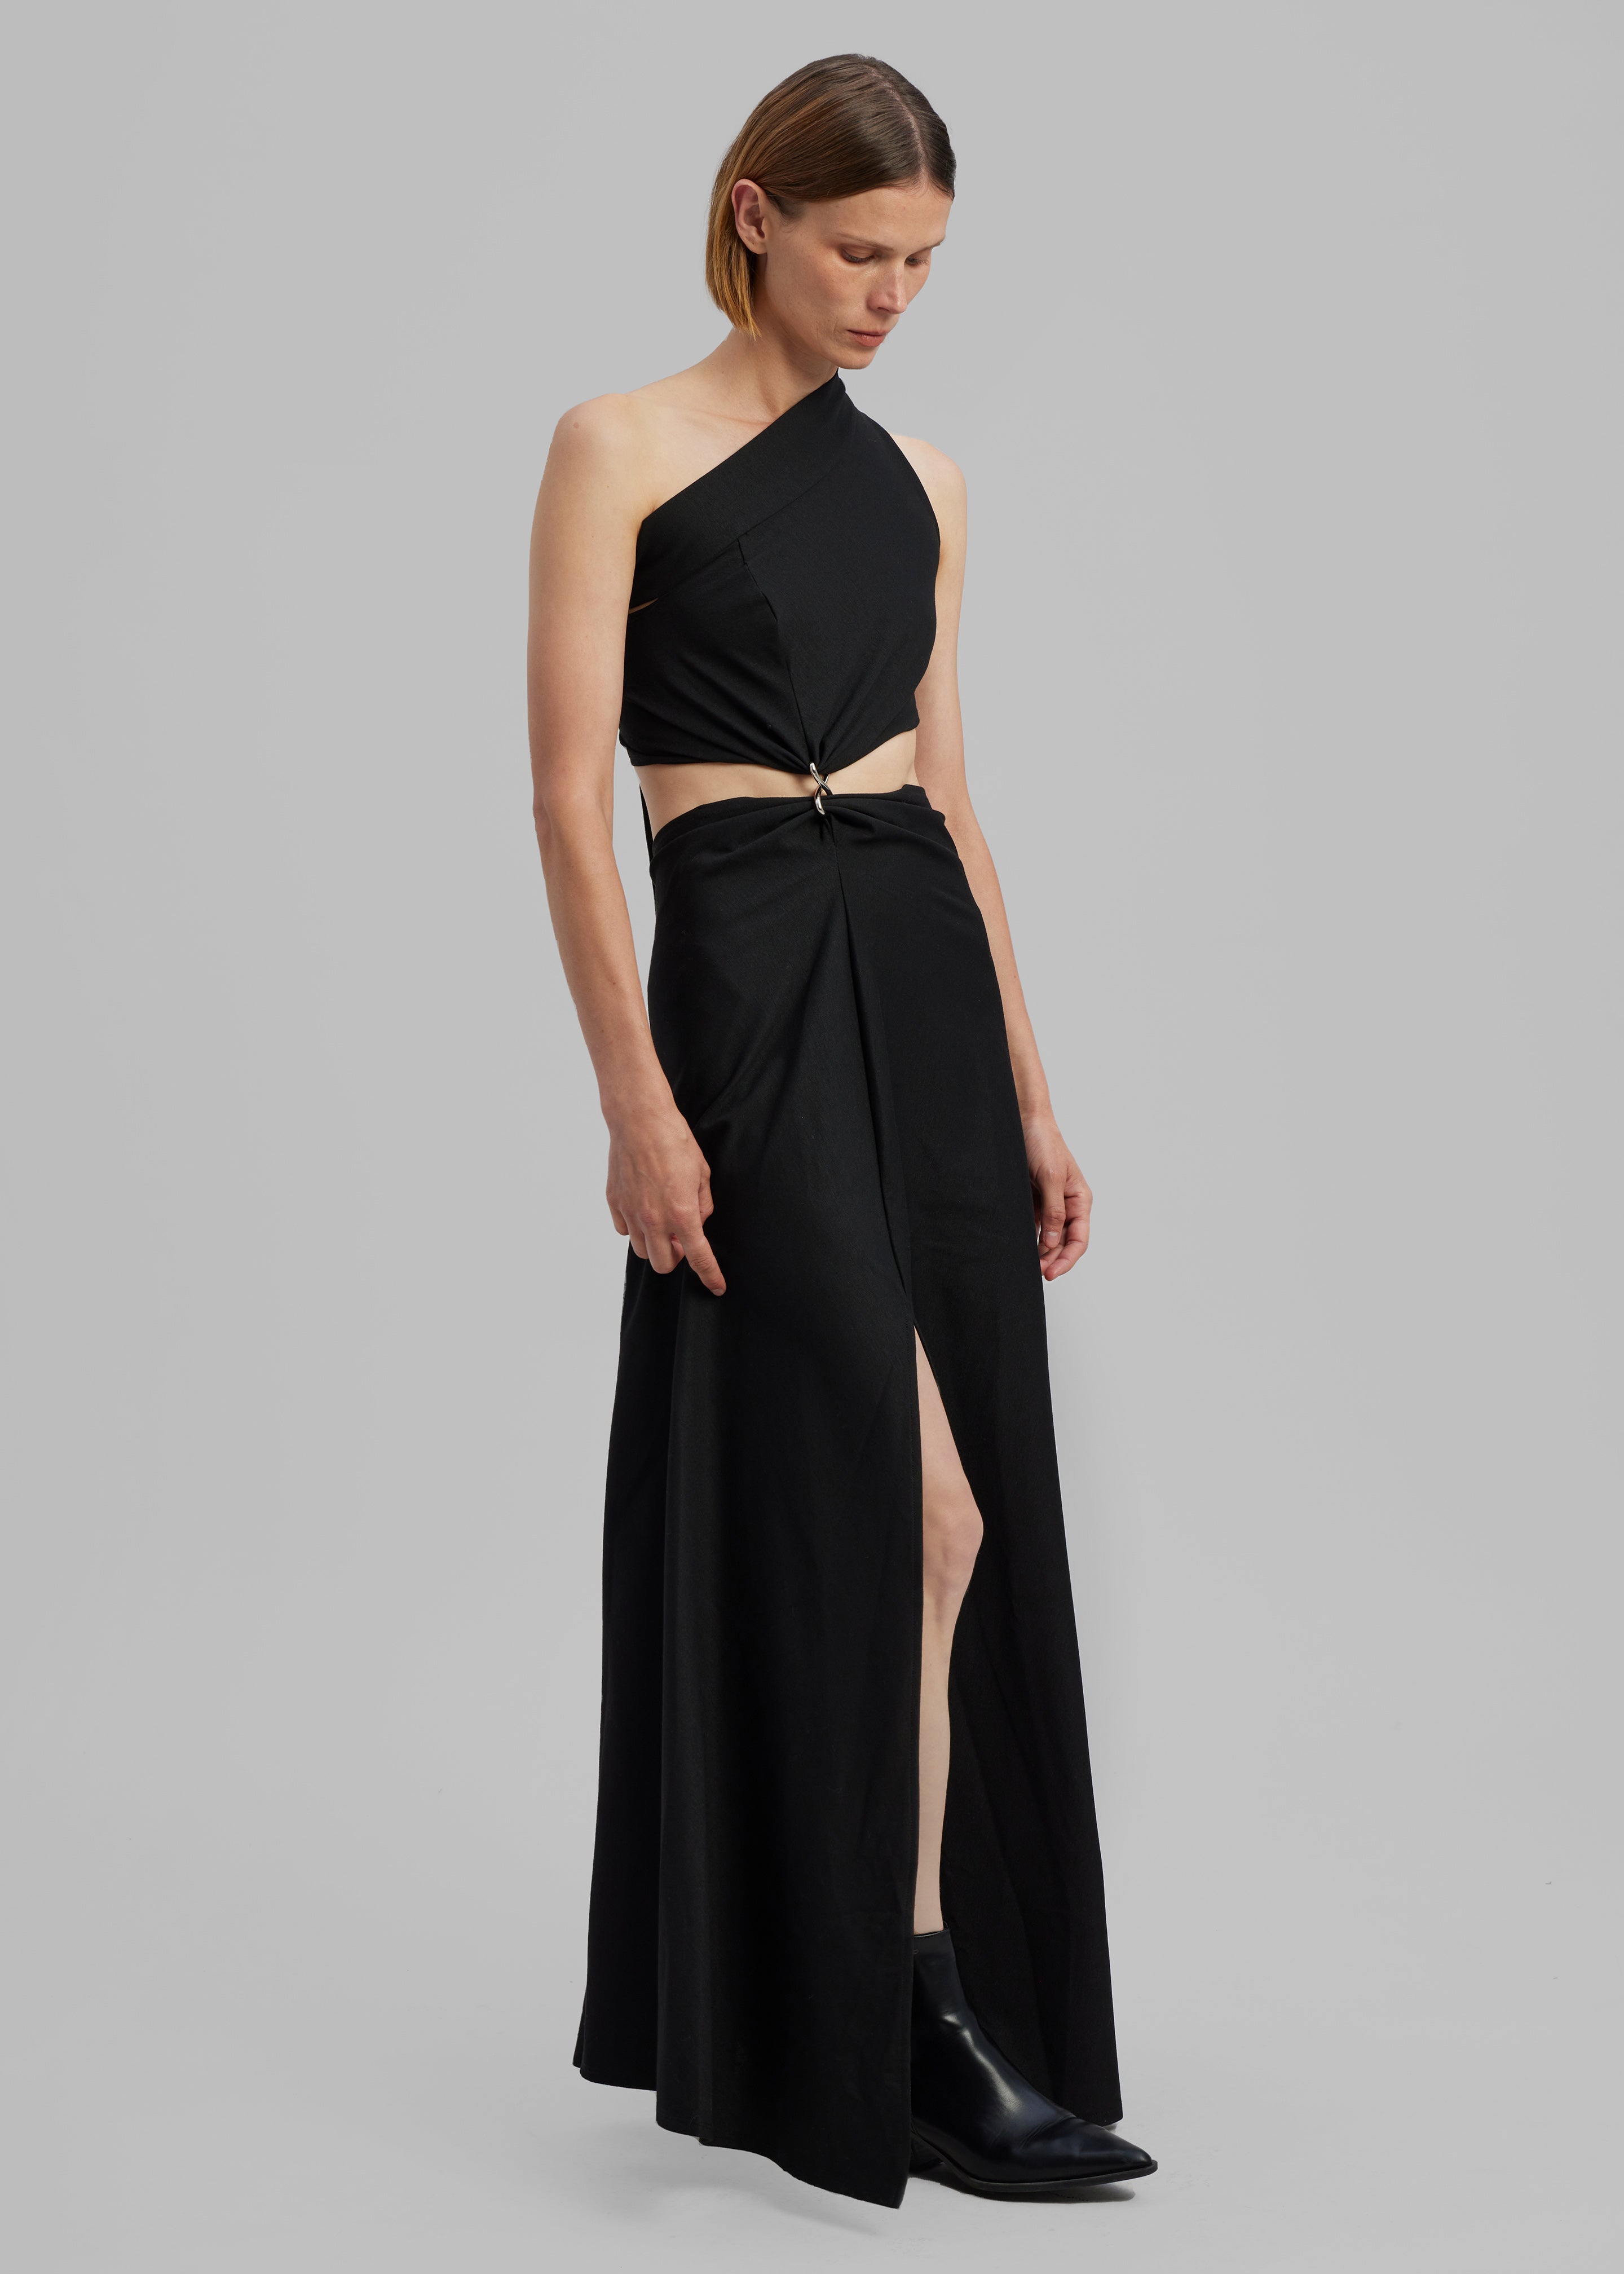 Sid Neigum Knit One-Shoulder Strap Dress W Hardware Detail - Black - 6